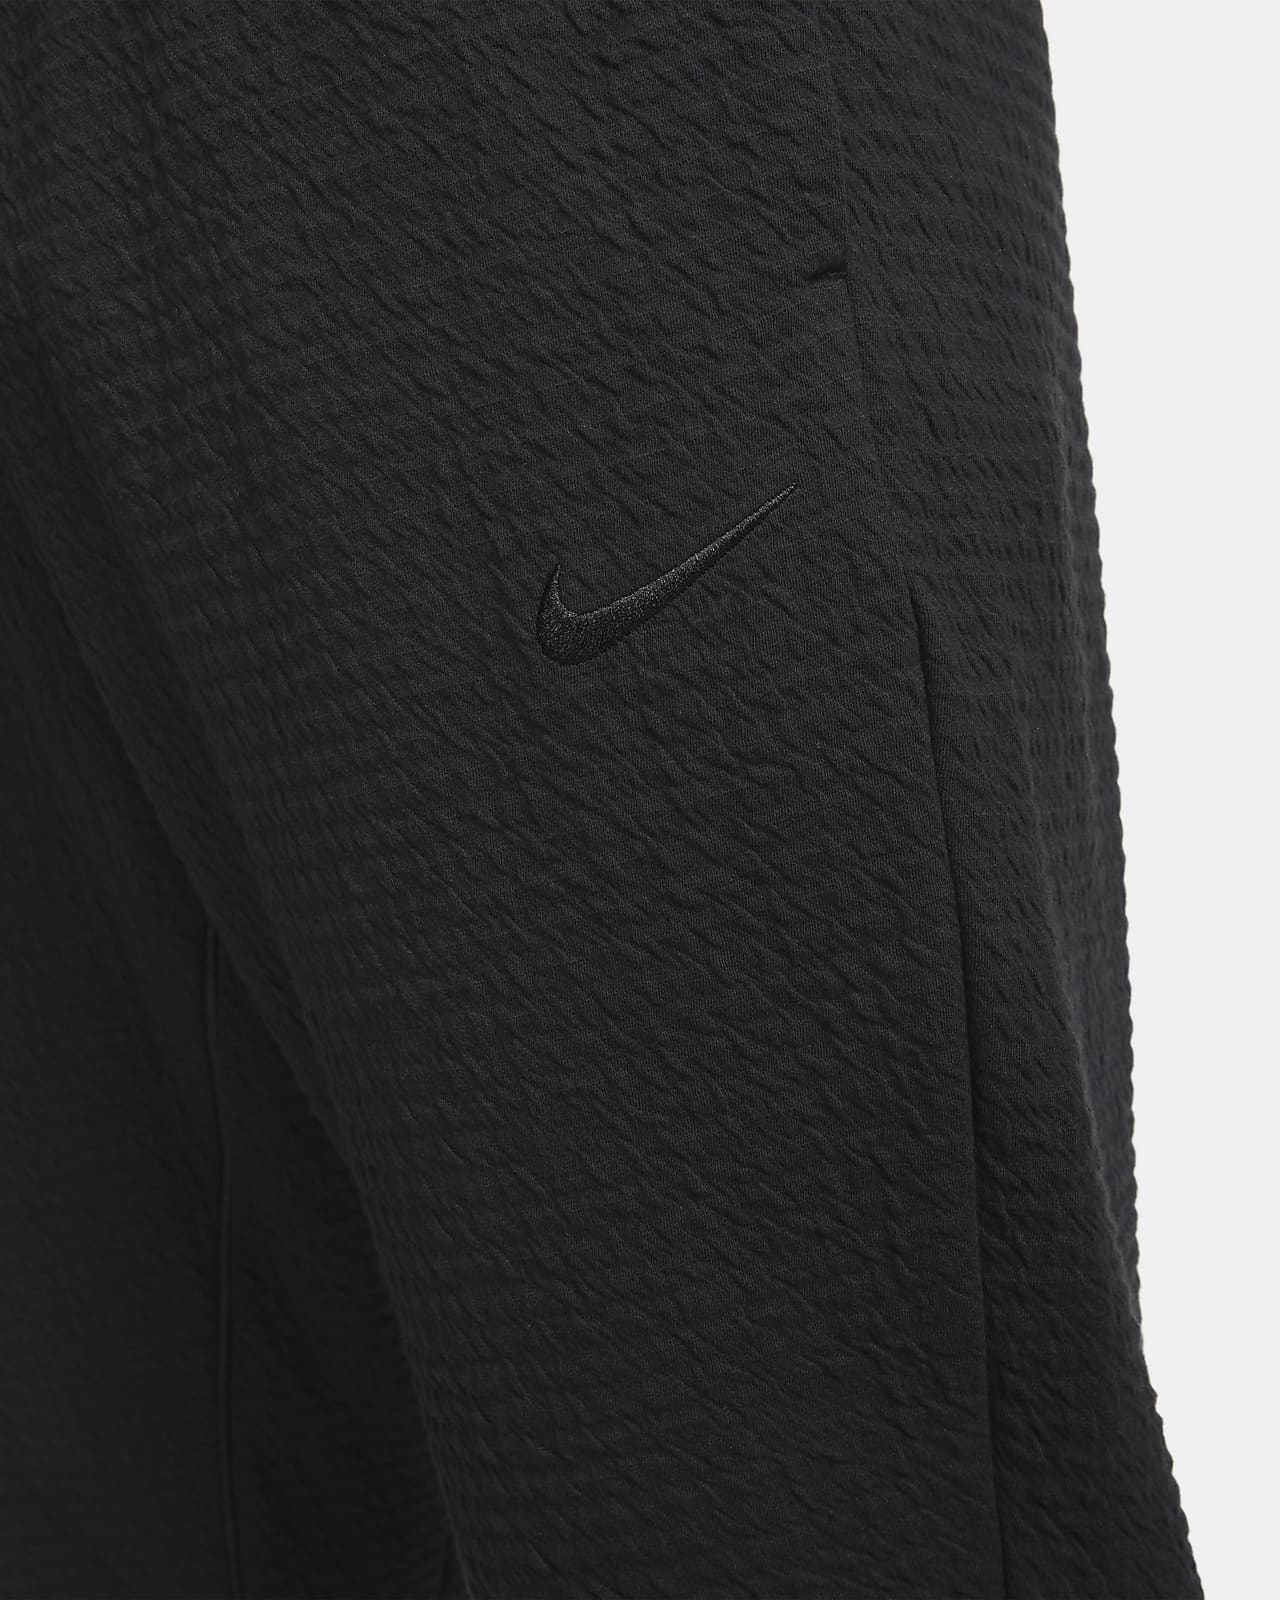 Nike Yoga Active Gym Pants Gray Loose Fit Dri-FIT DH1933-032 Men's Size  Large